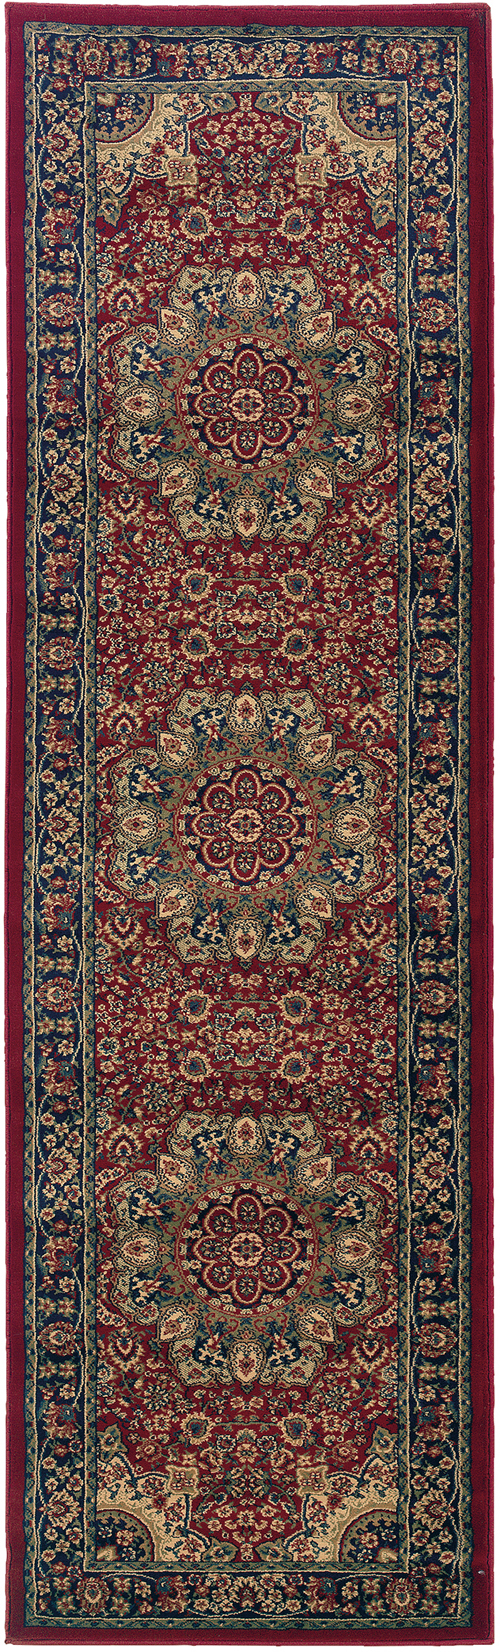 oriental weavers ariana 116r3 red